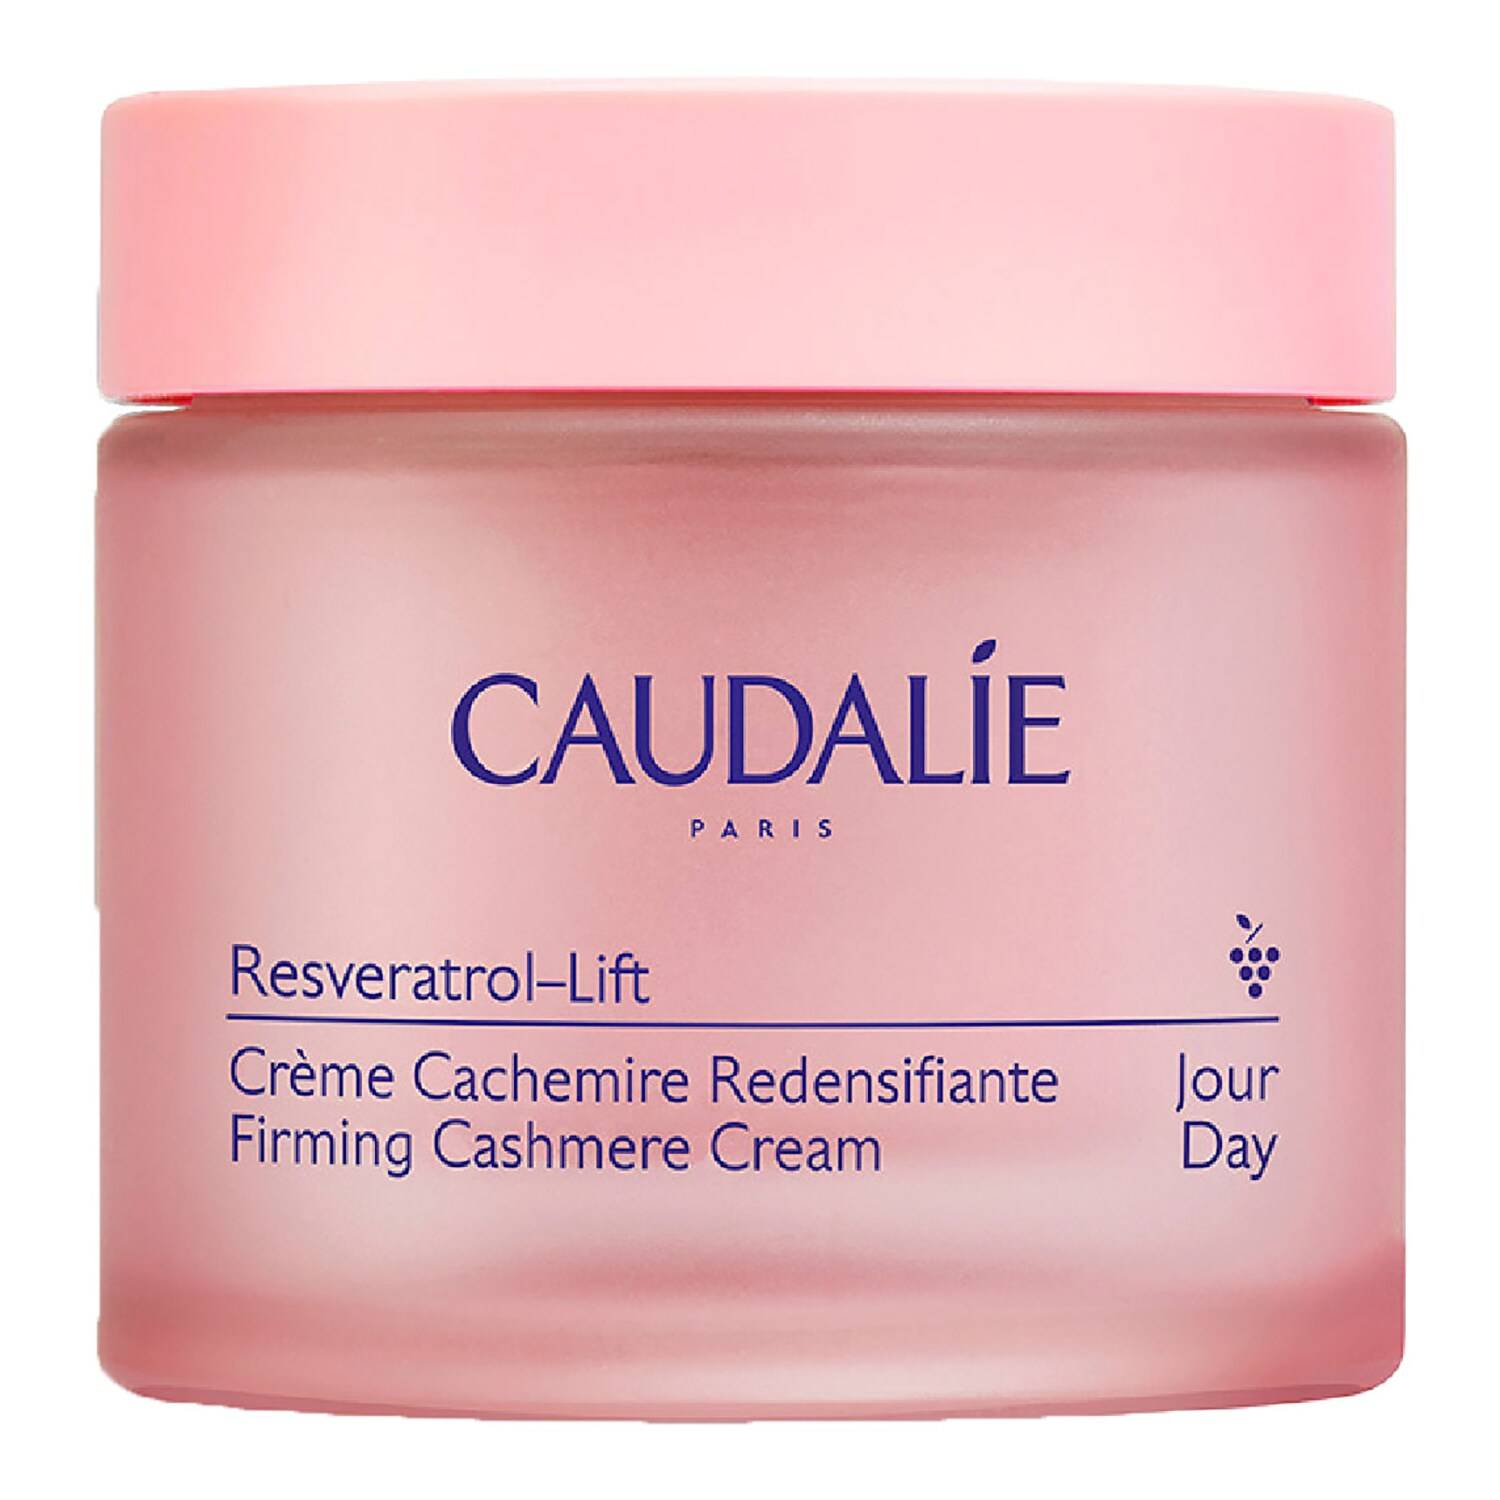 CAUDALIE Resveratrol-Lift Firming Cashmere Cream 50ml